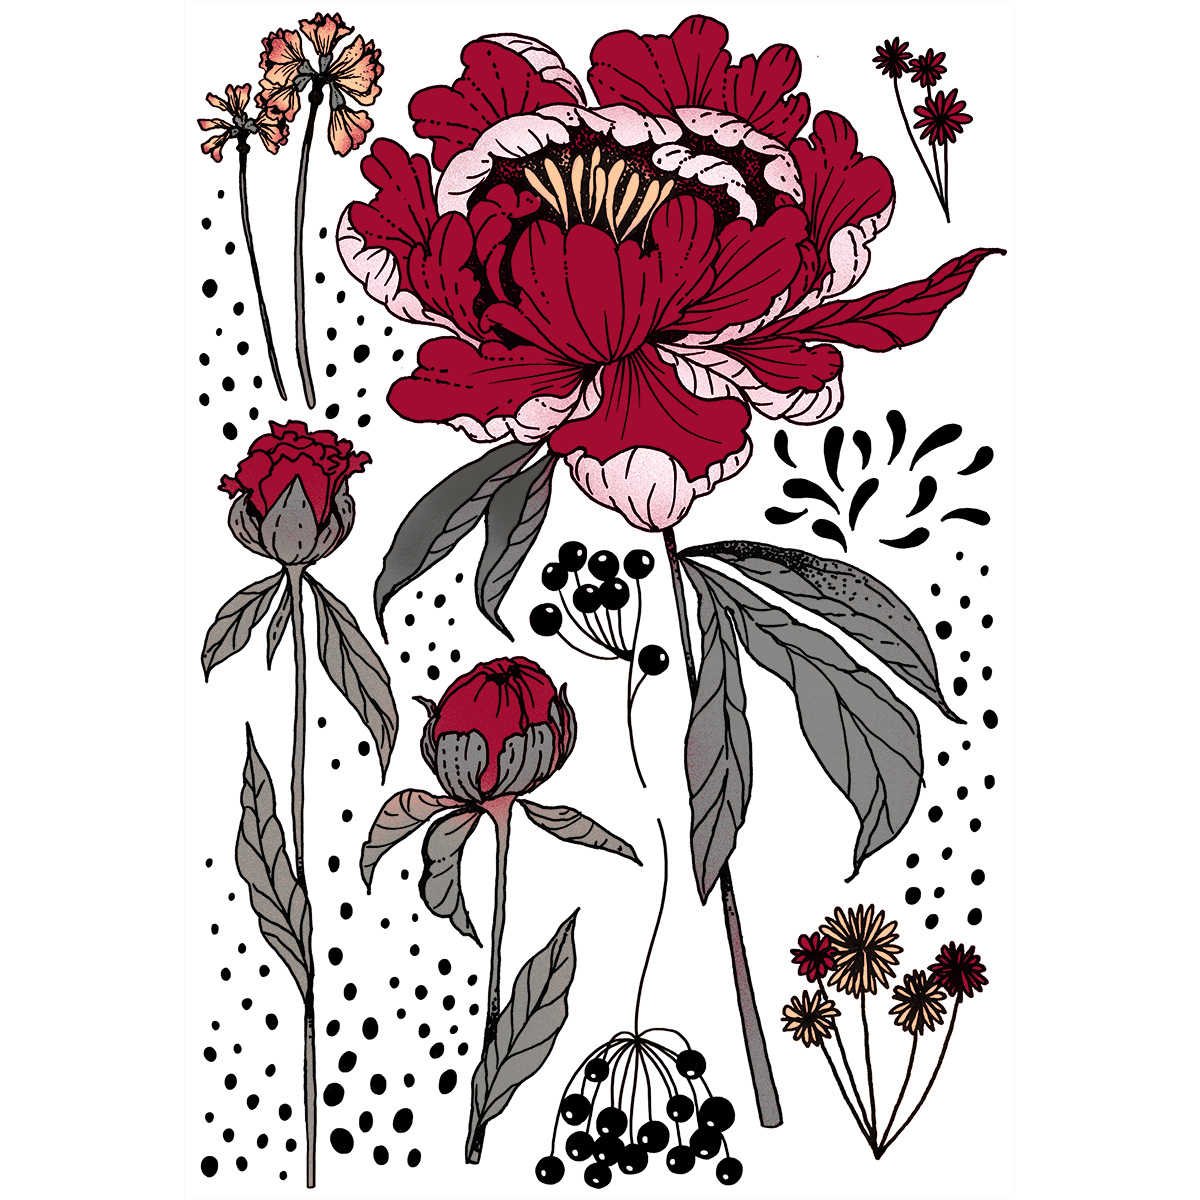 Sticker mural floral Mélinda | Acte-Deco